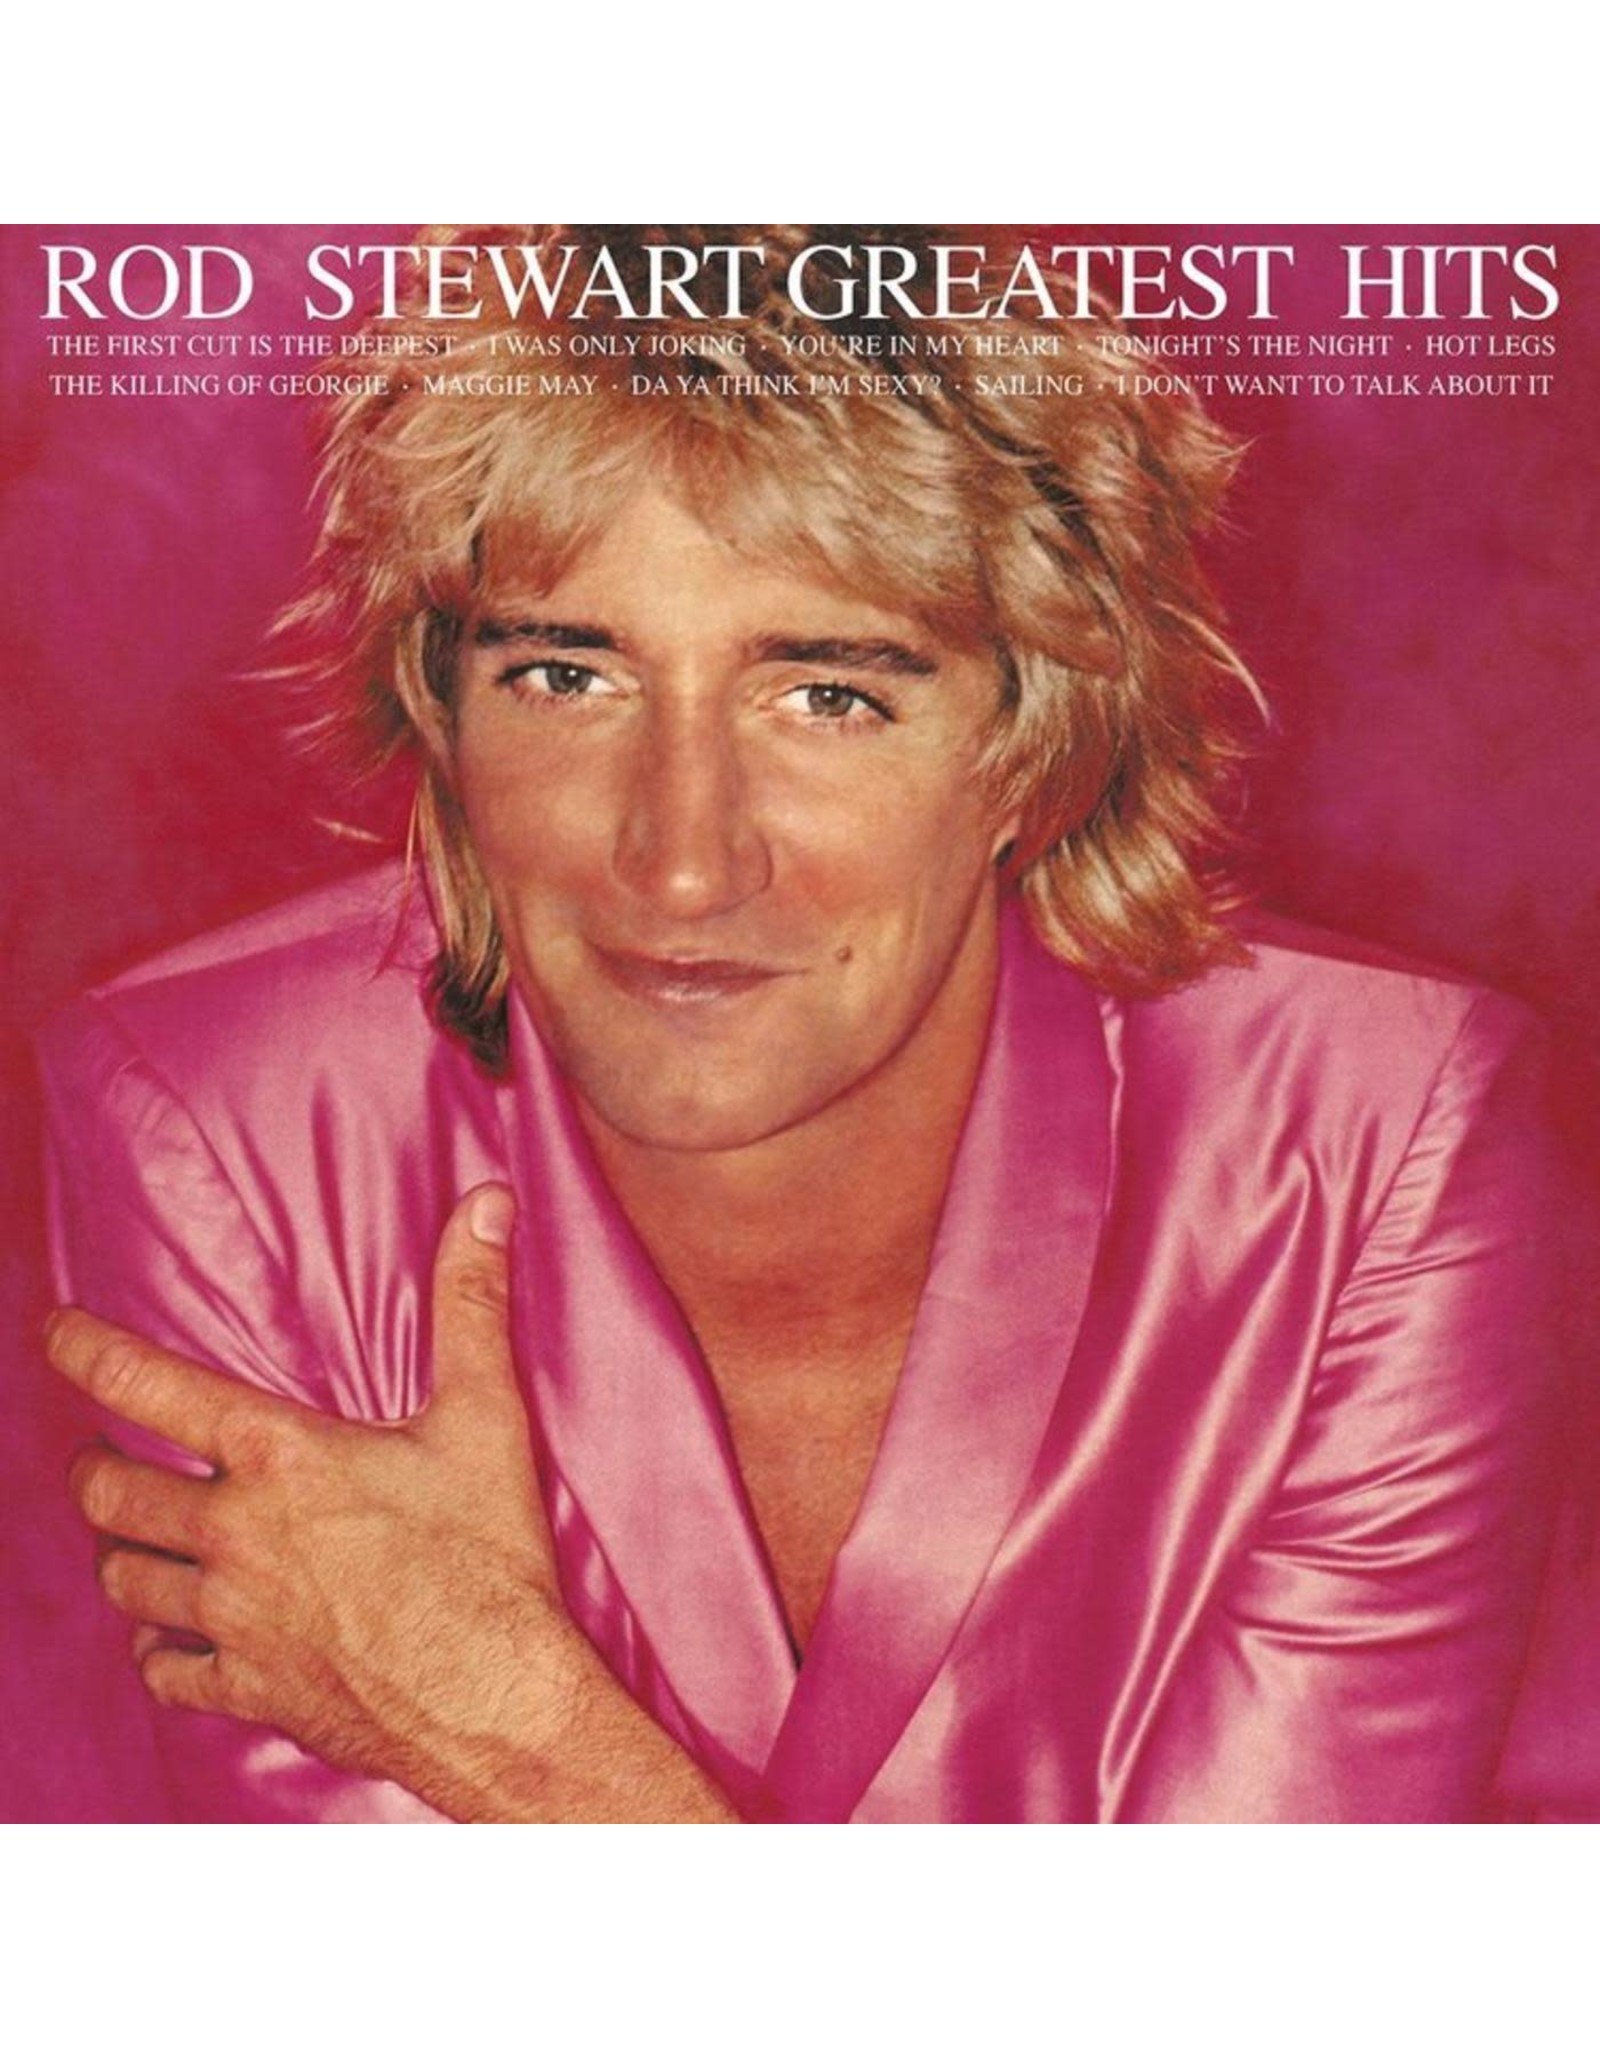 Rod Stewart: albums, songs, playlists